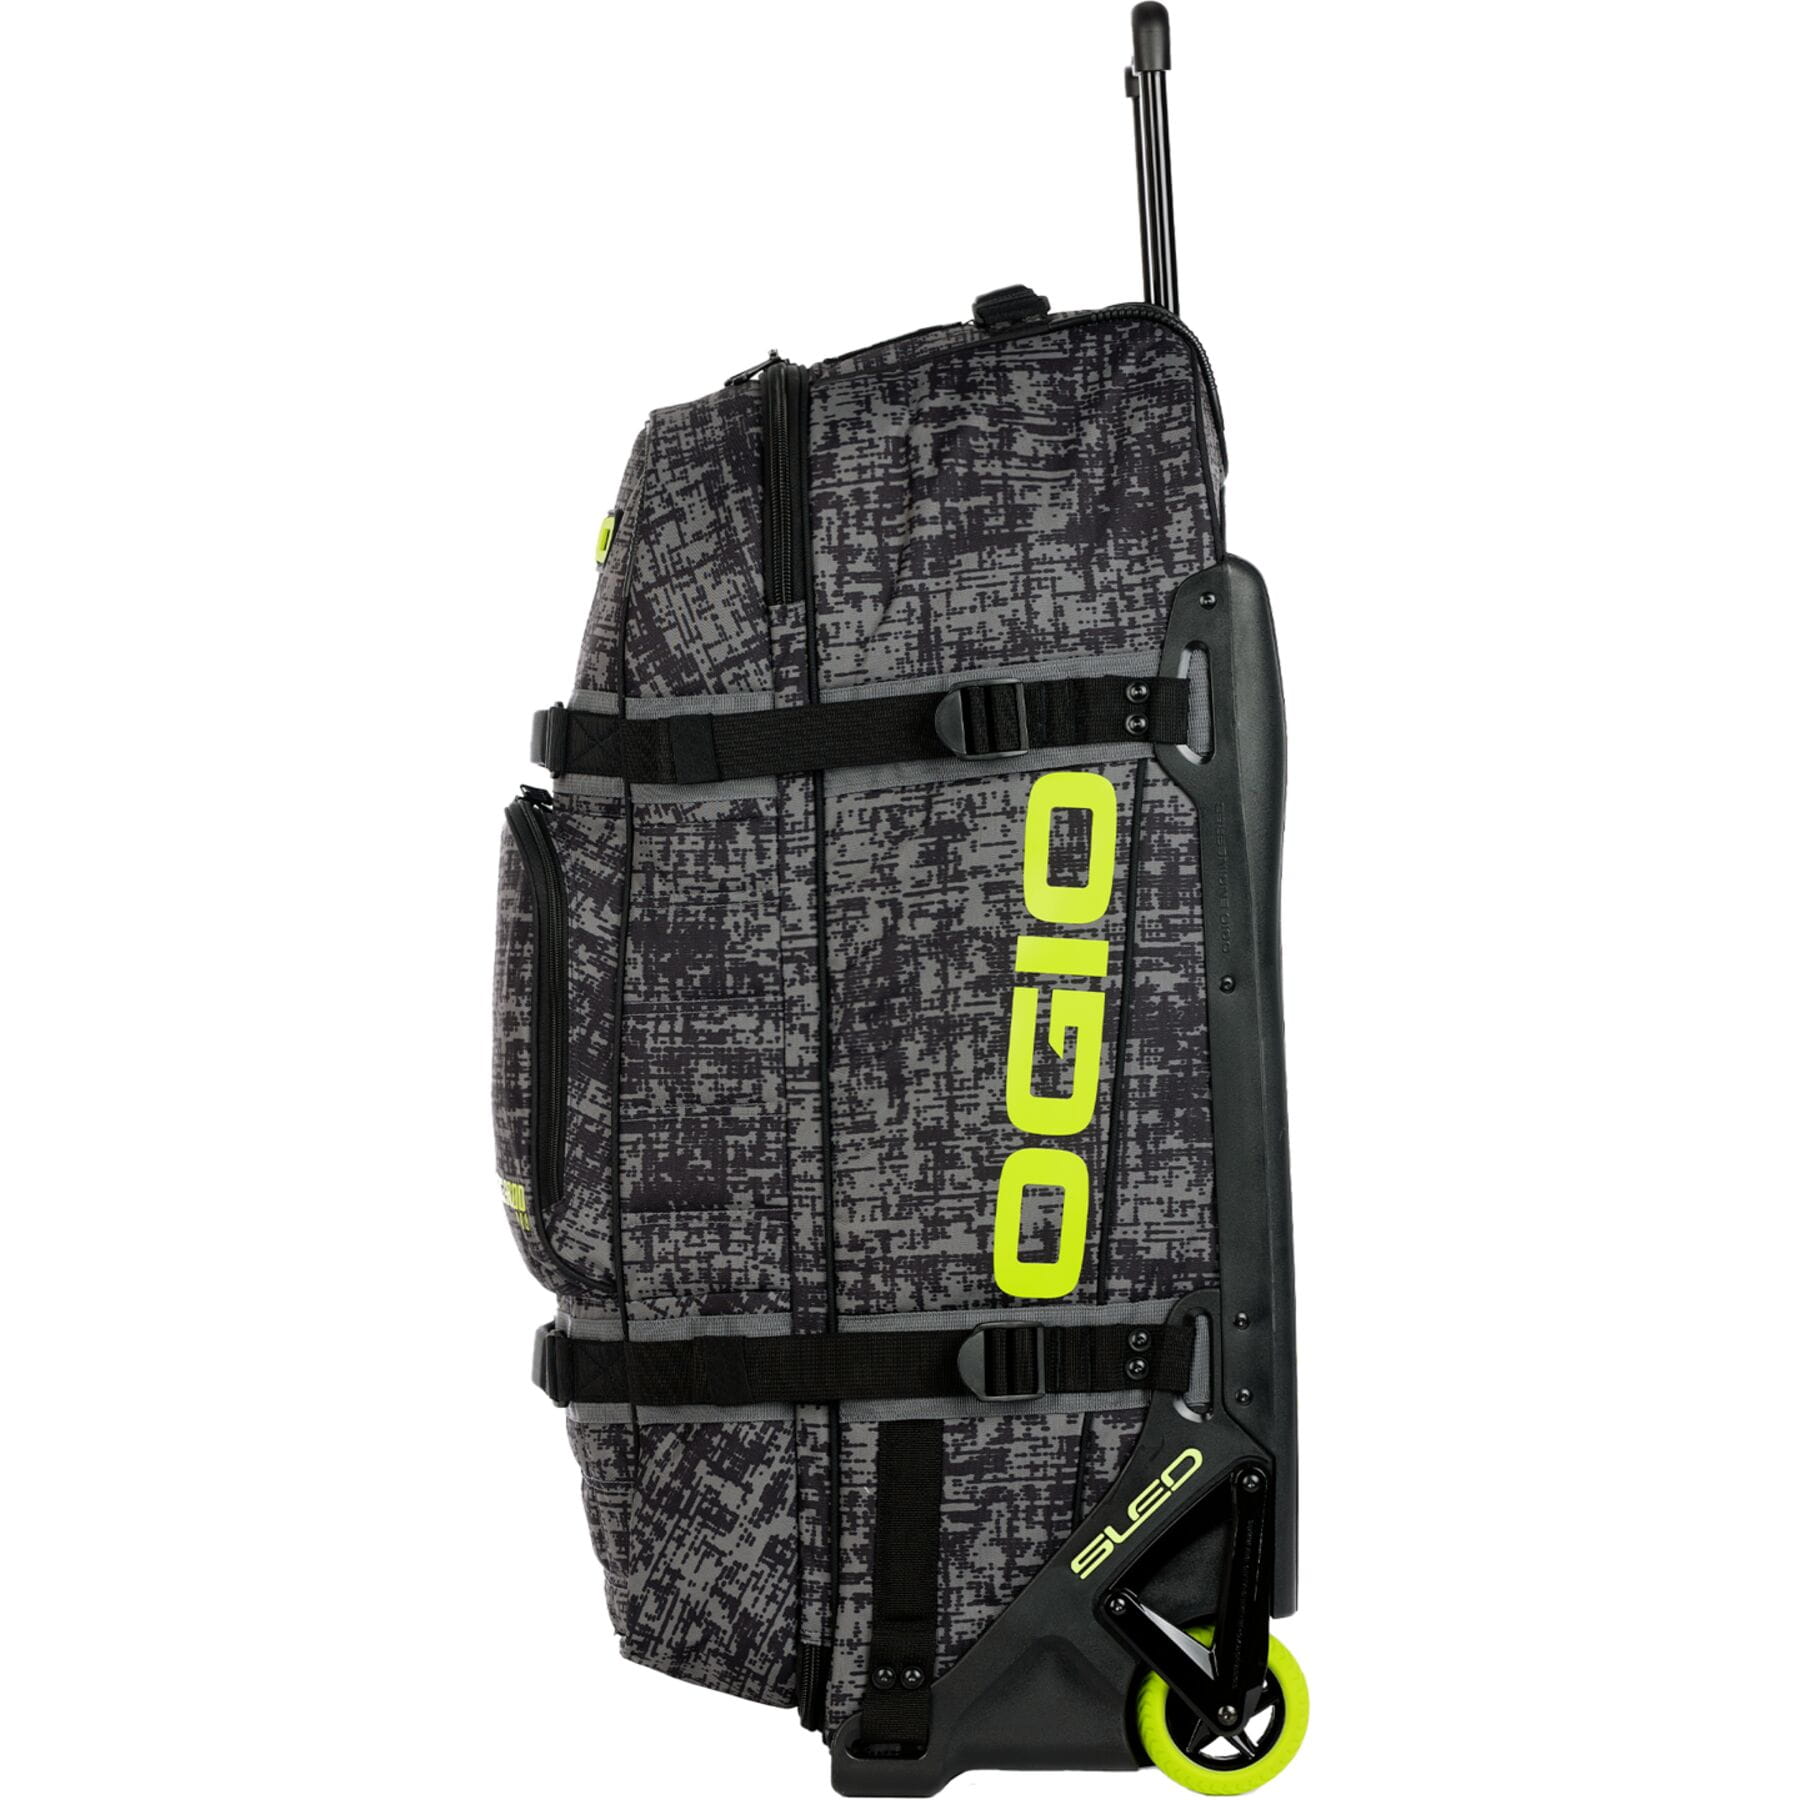 Ogio Rig 9800 PRO Gear Bag Chaos